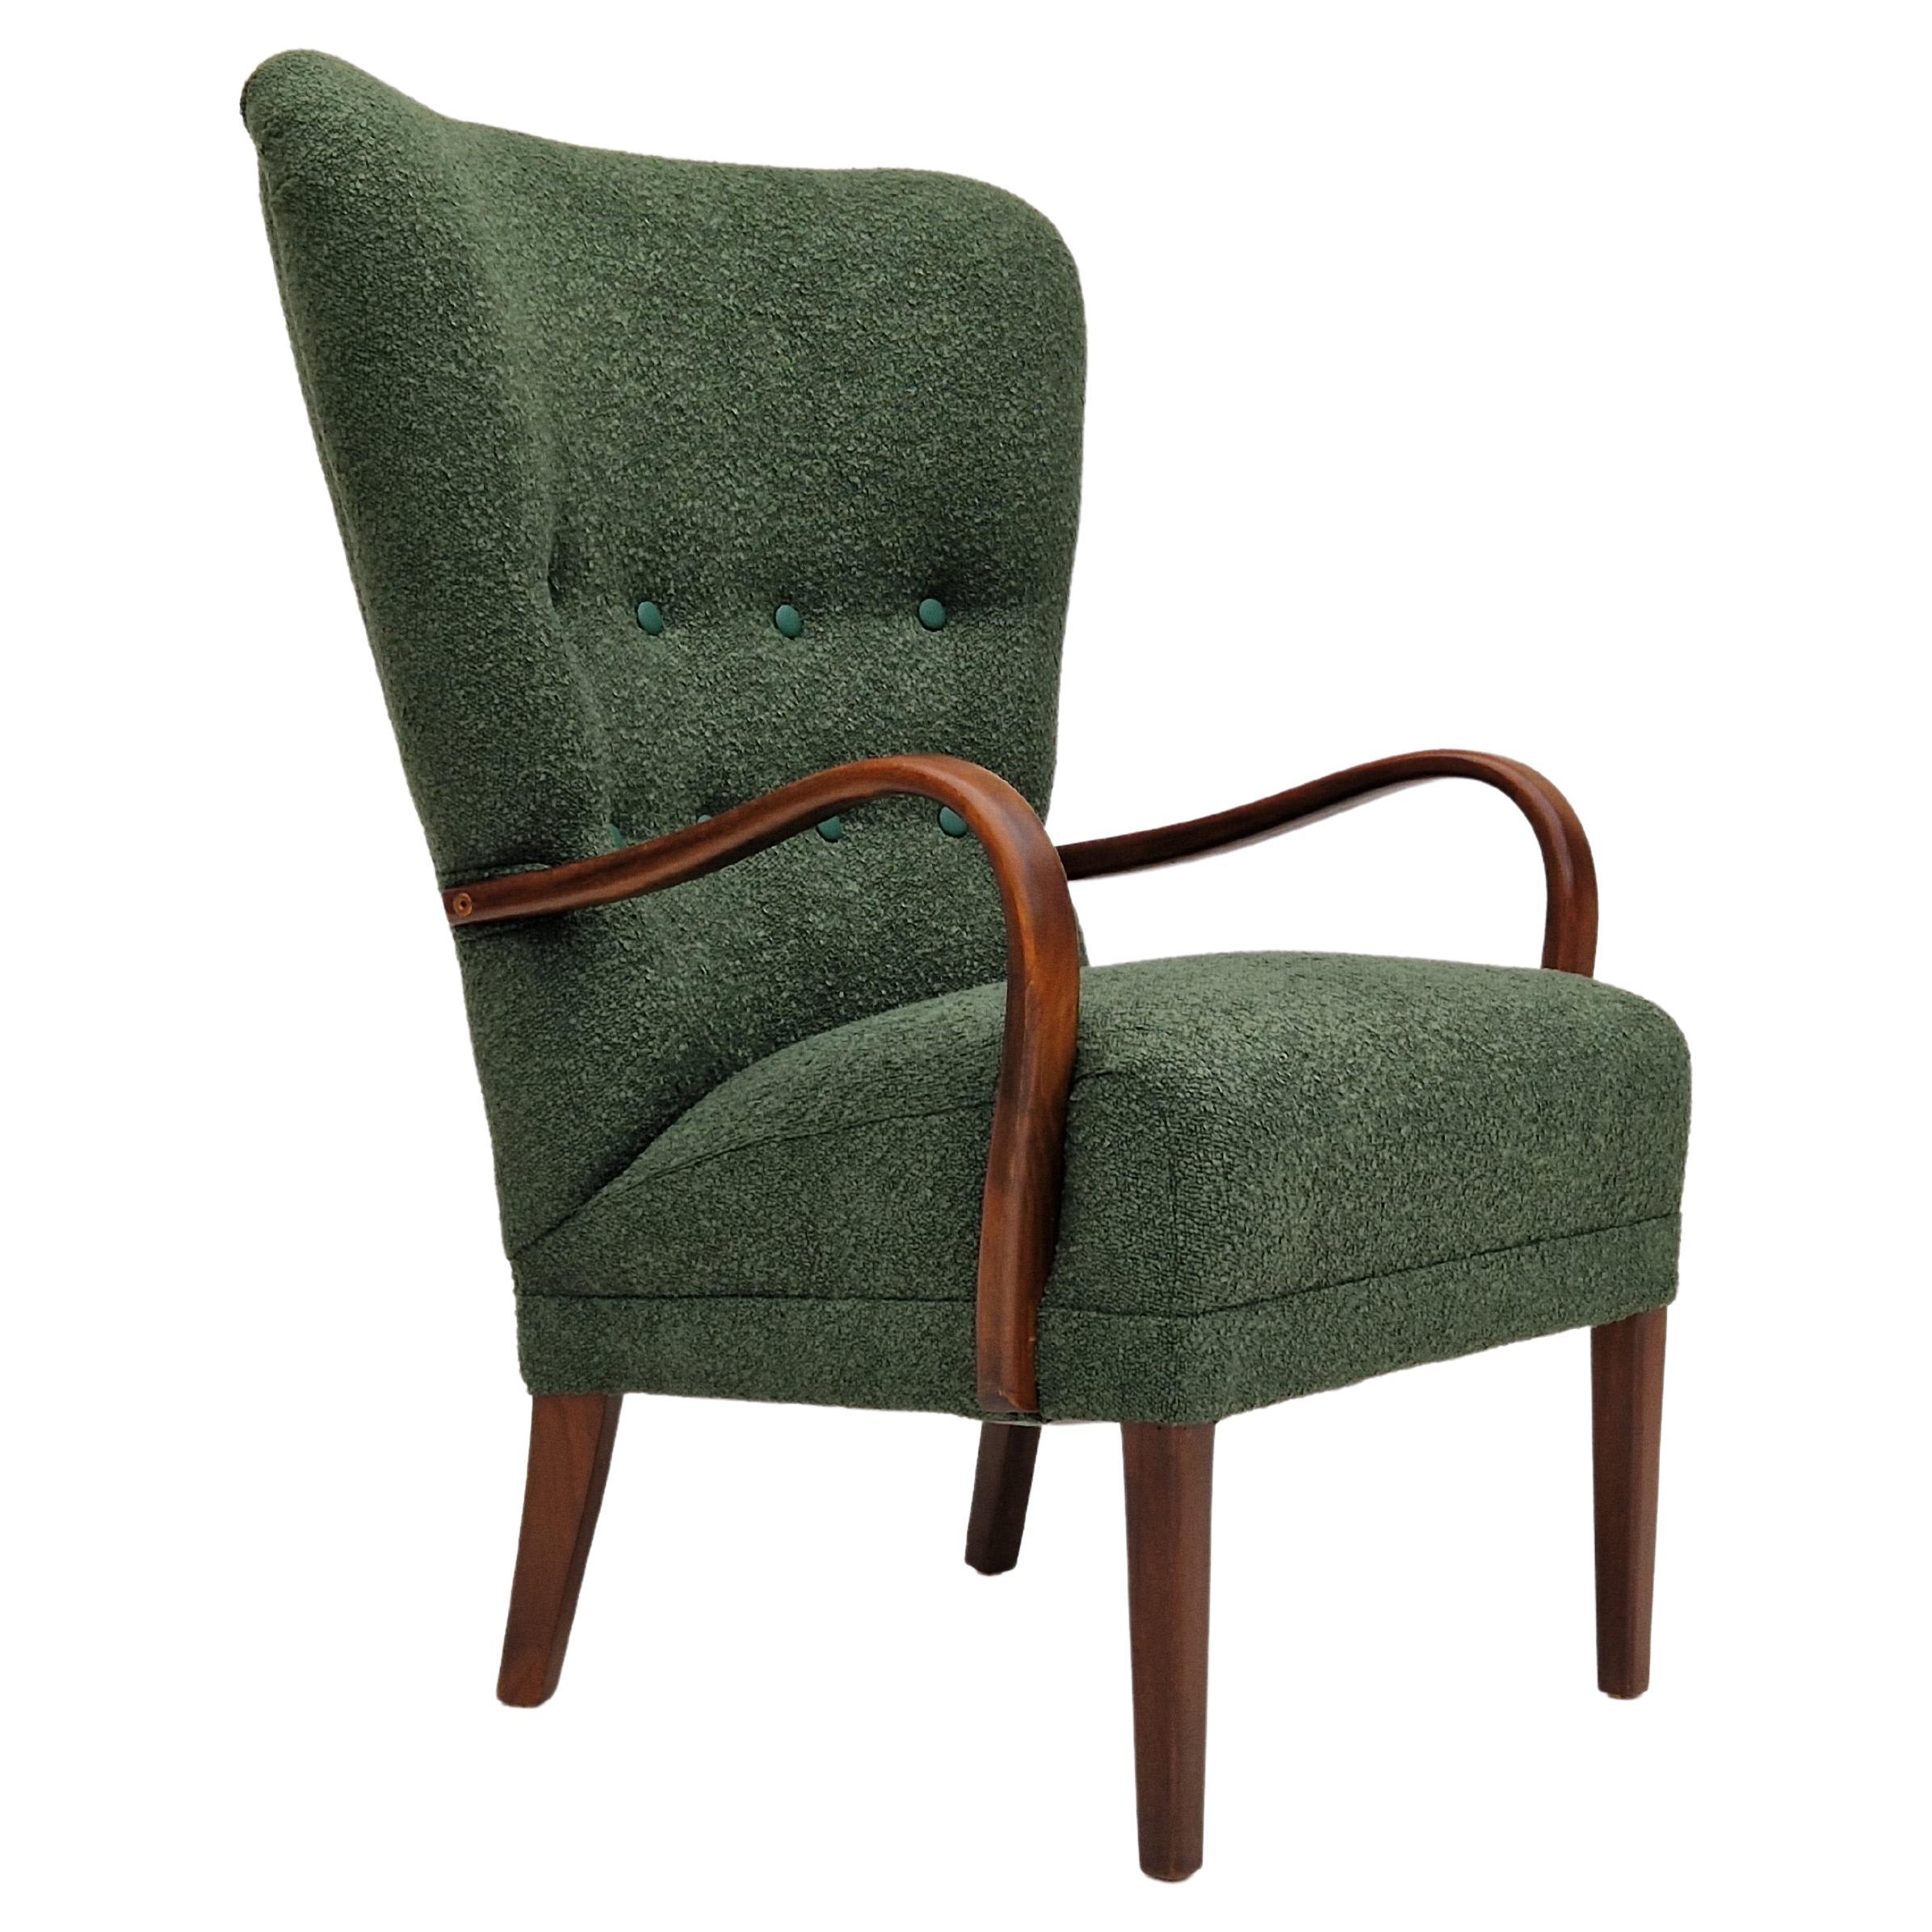 1960s, Danish Design, Reupholstered Armchair, Bottle Green Fabric